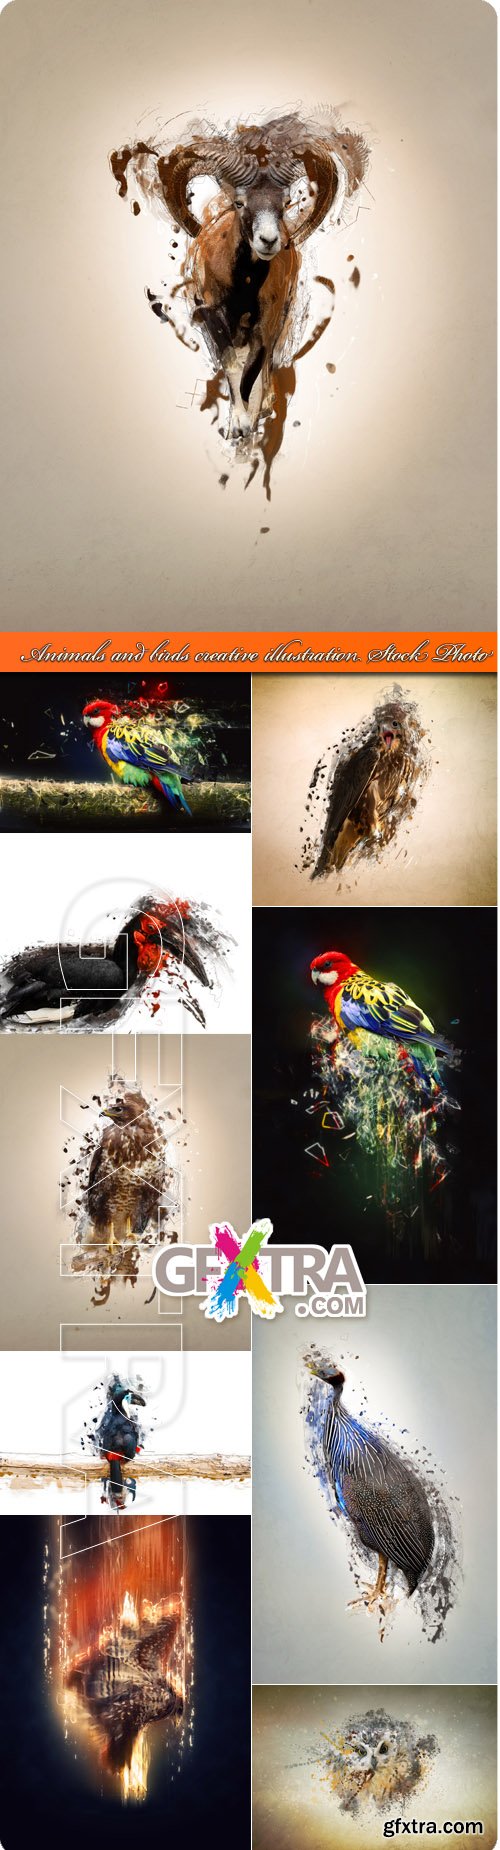 Animals and birds creative illustration Stock Photo